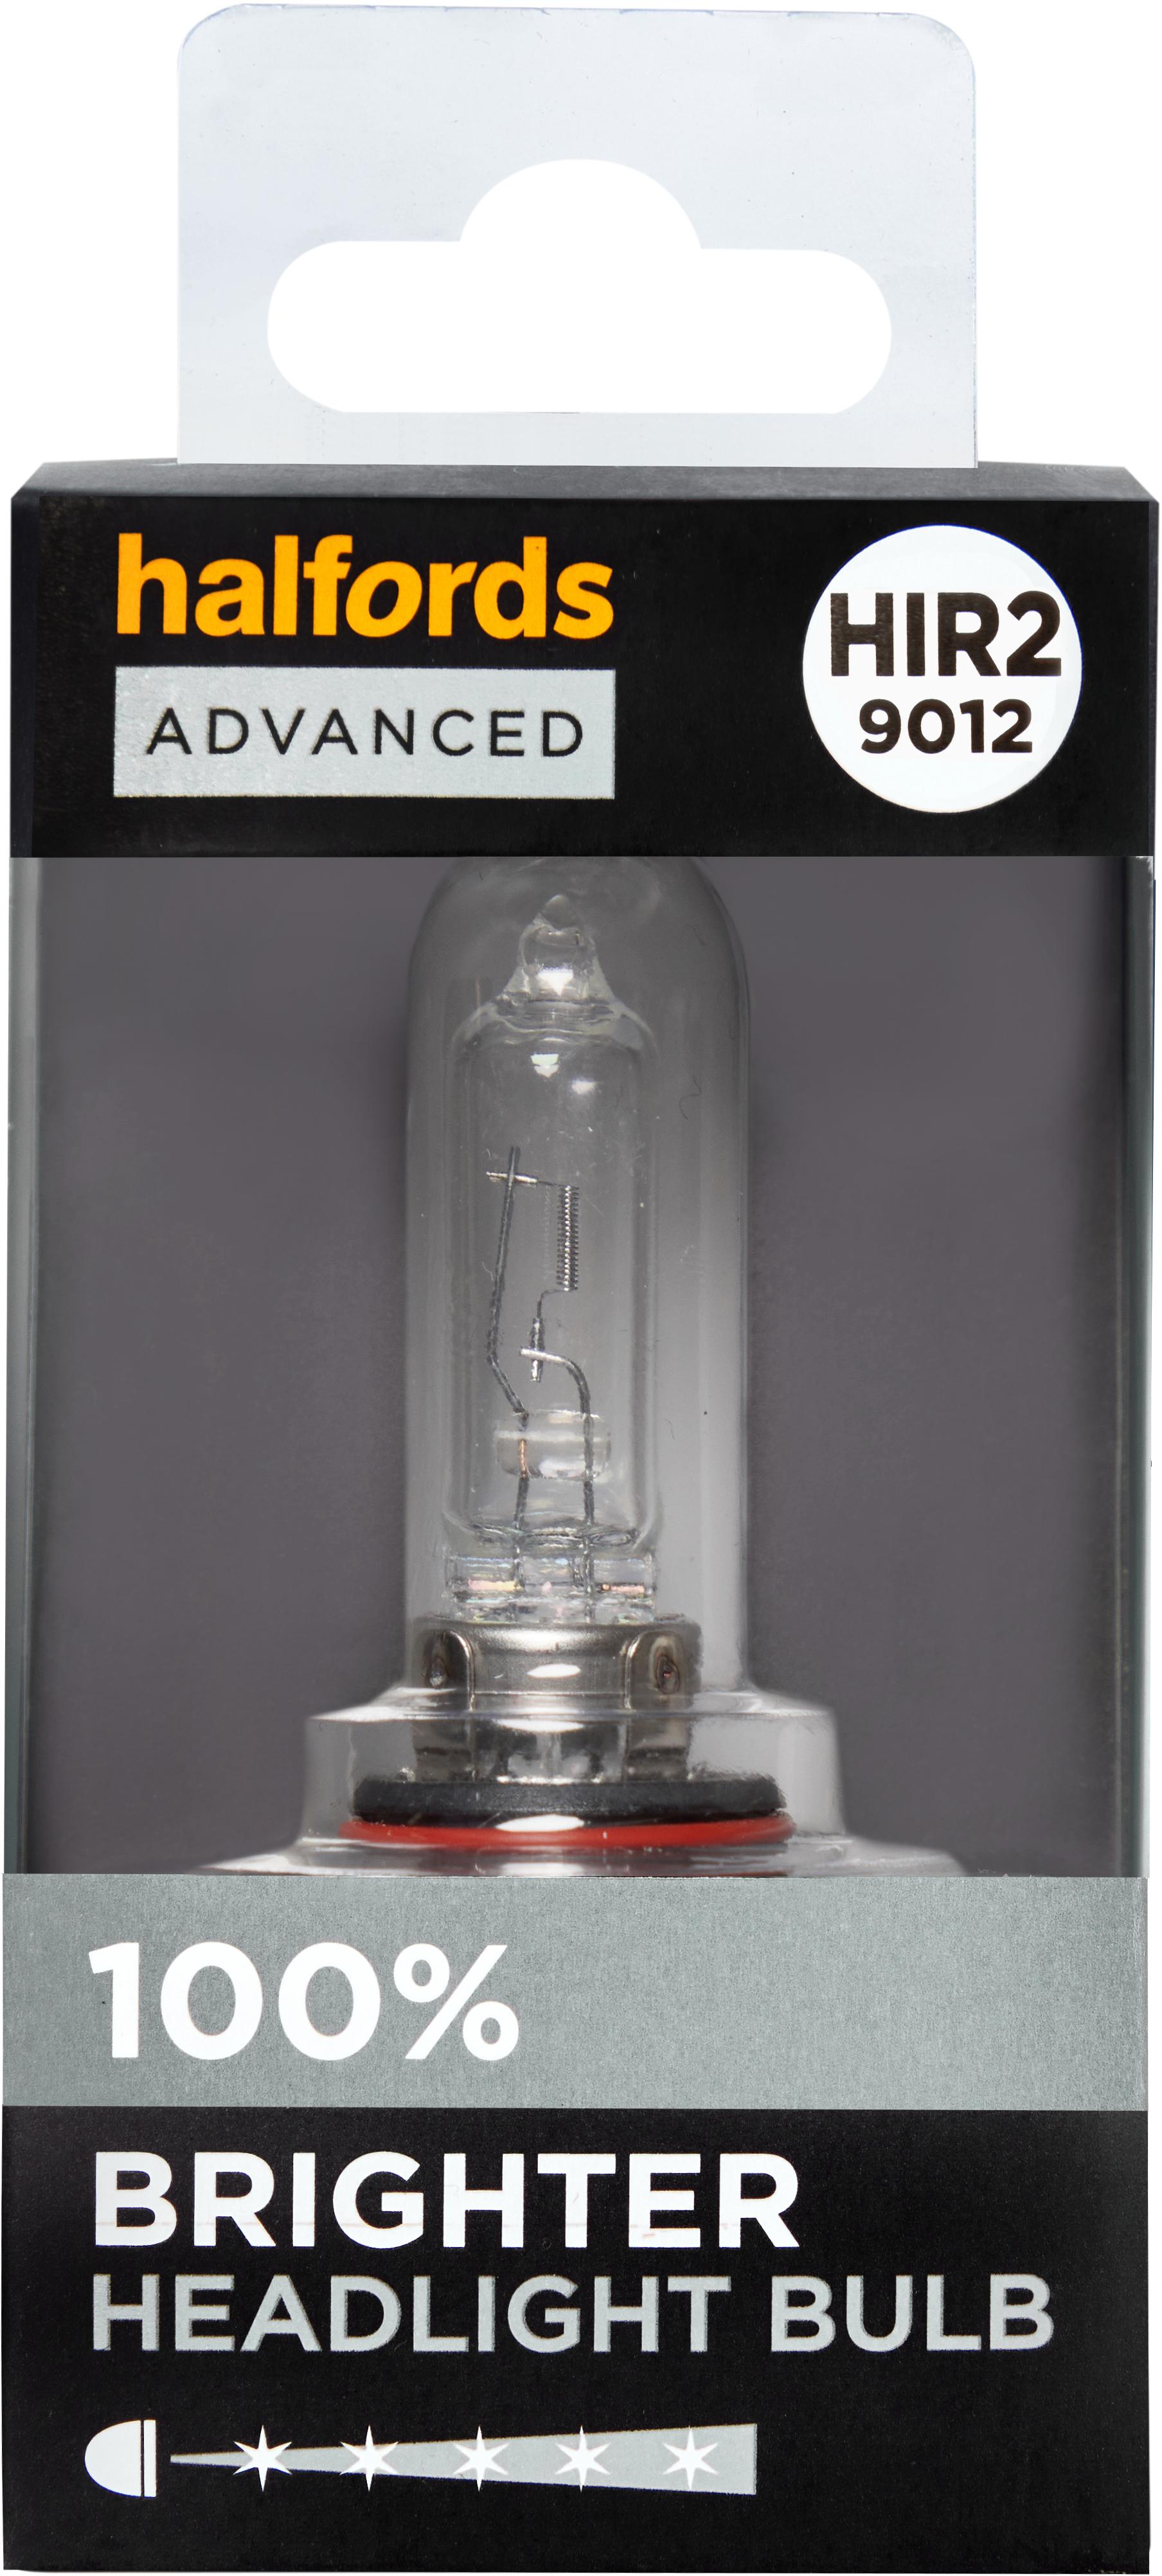 Halfords Advanced +100% Brighter Hir2 9012 Headlight Bulb